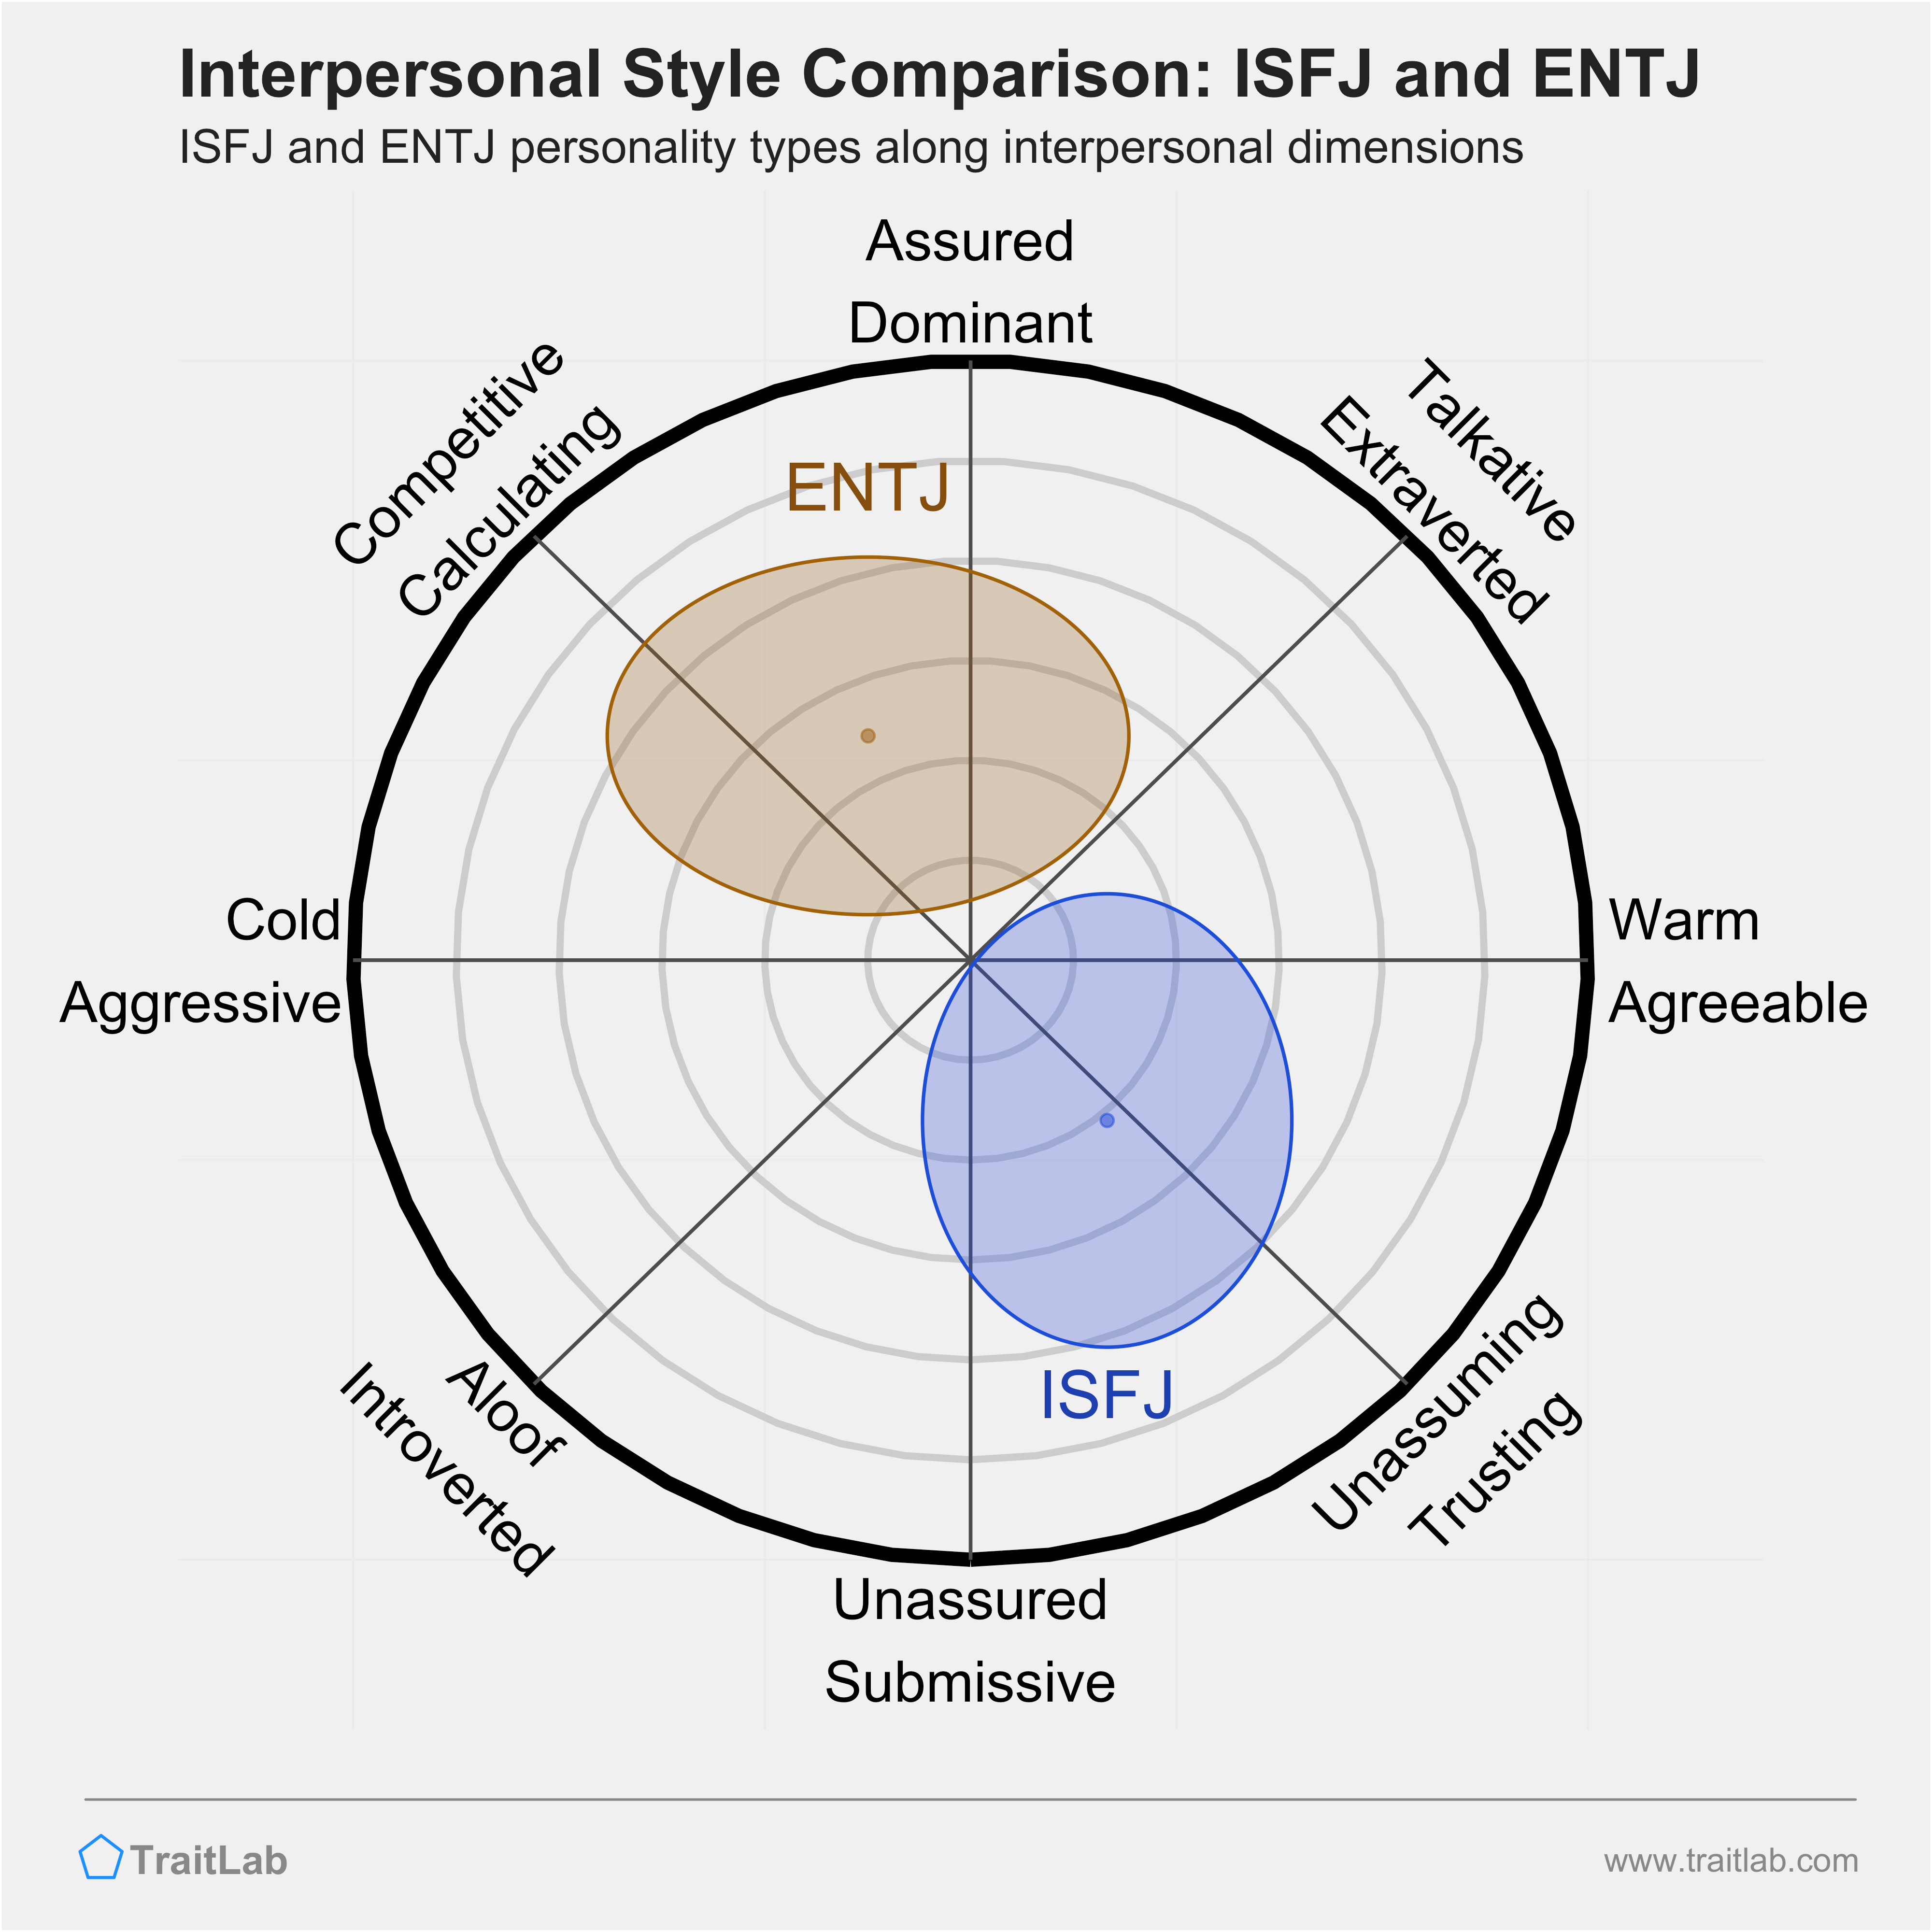 ISFJ and ENTJ comparison across interpersonal dimensions